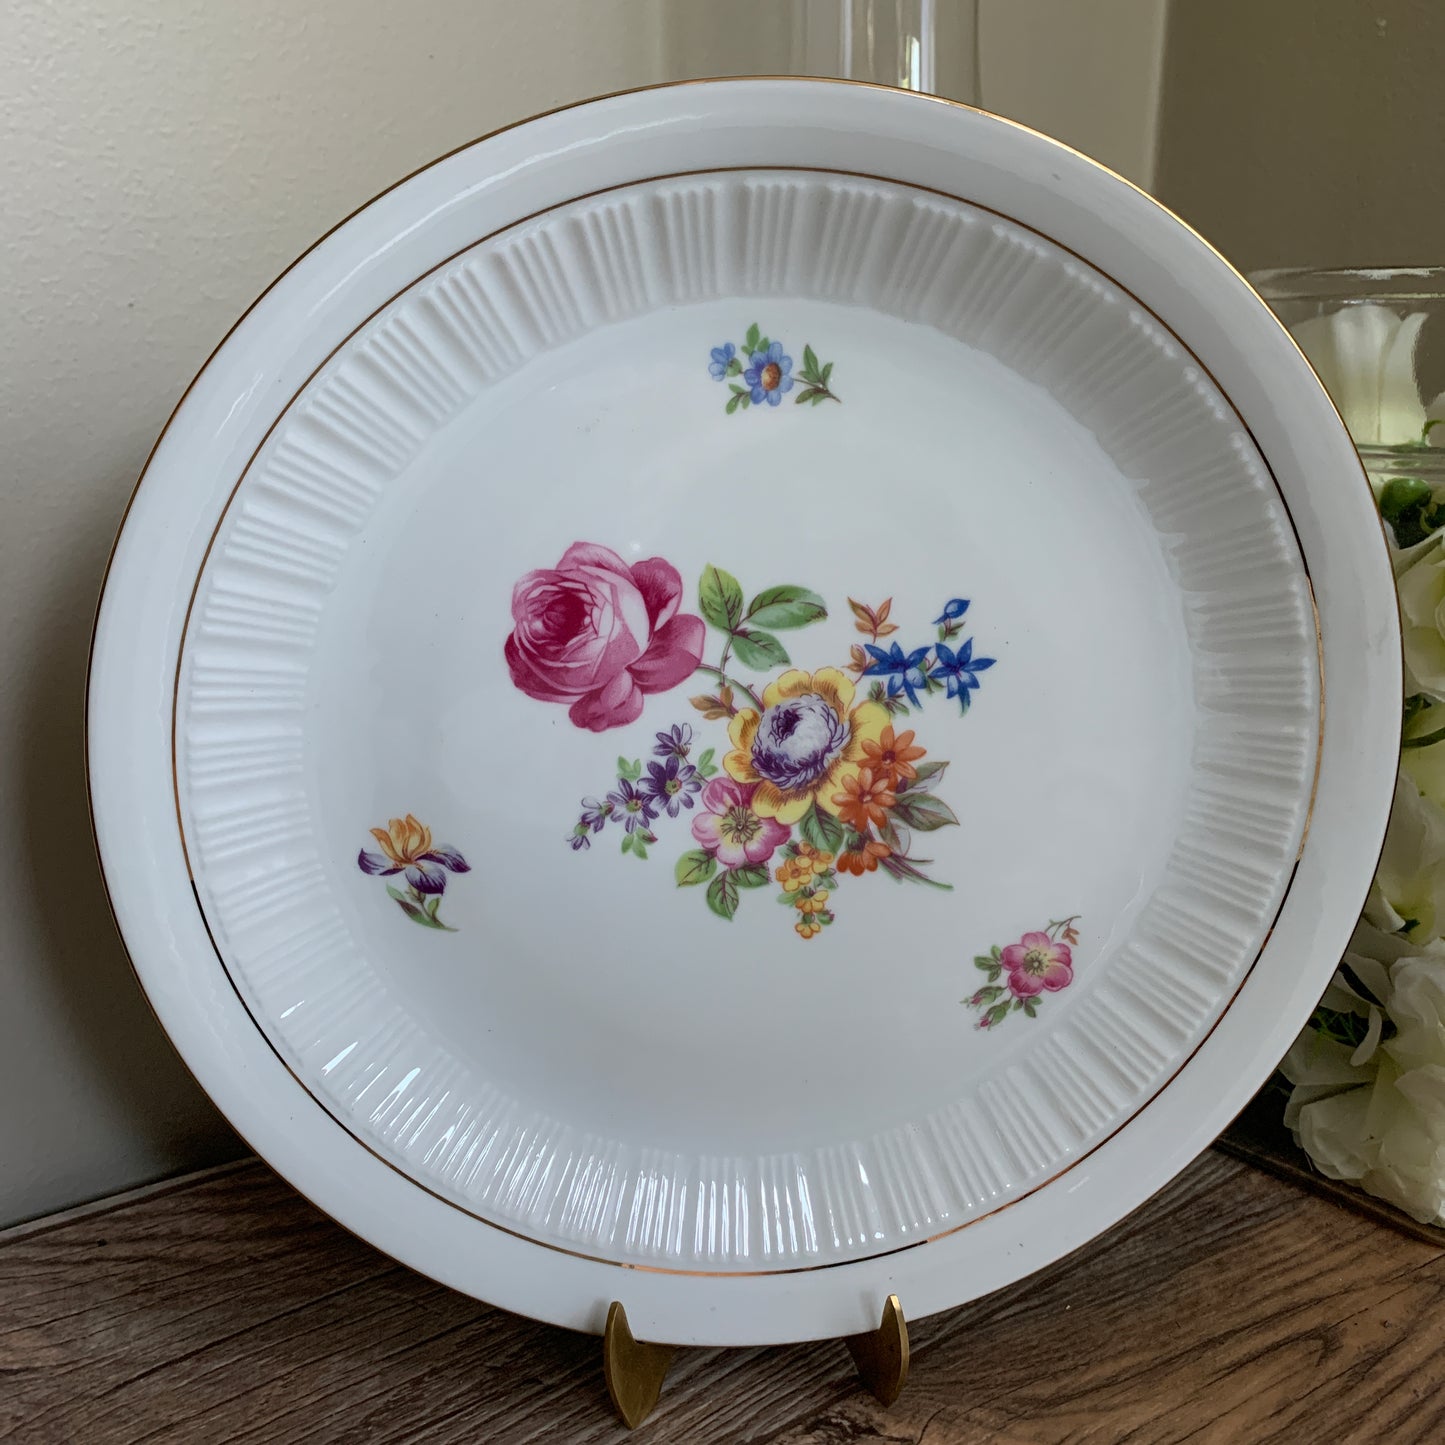 Vintage German Porcelain Dinner Plates with Colourful Floral Pattern